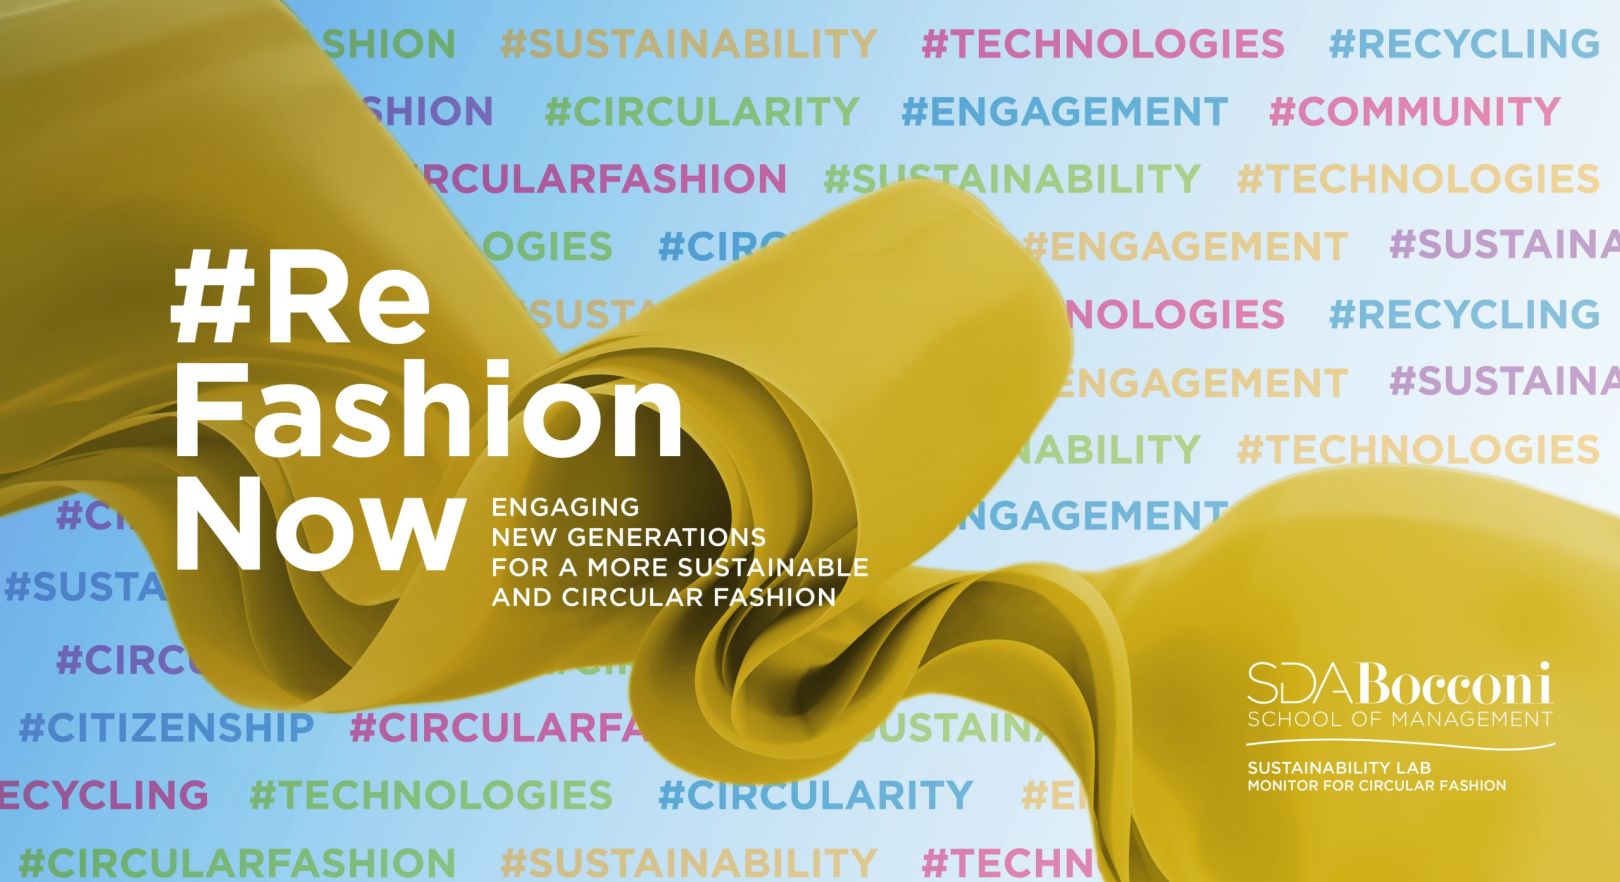 Ideathon #RefashioningMilan kicks off: Milan as an incubator for sustainable fashion and design